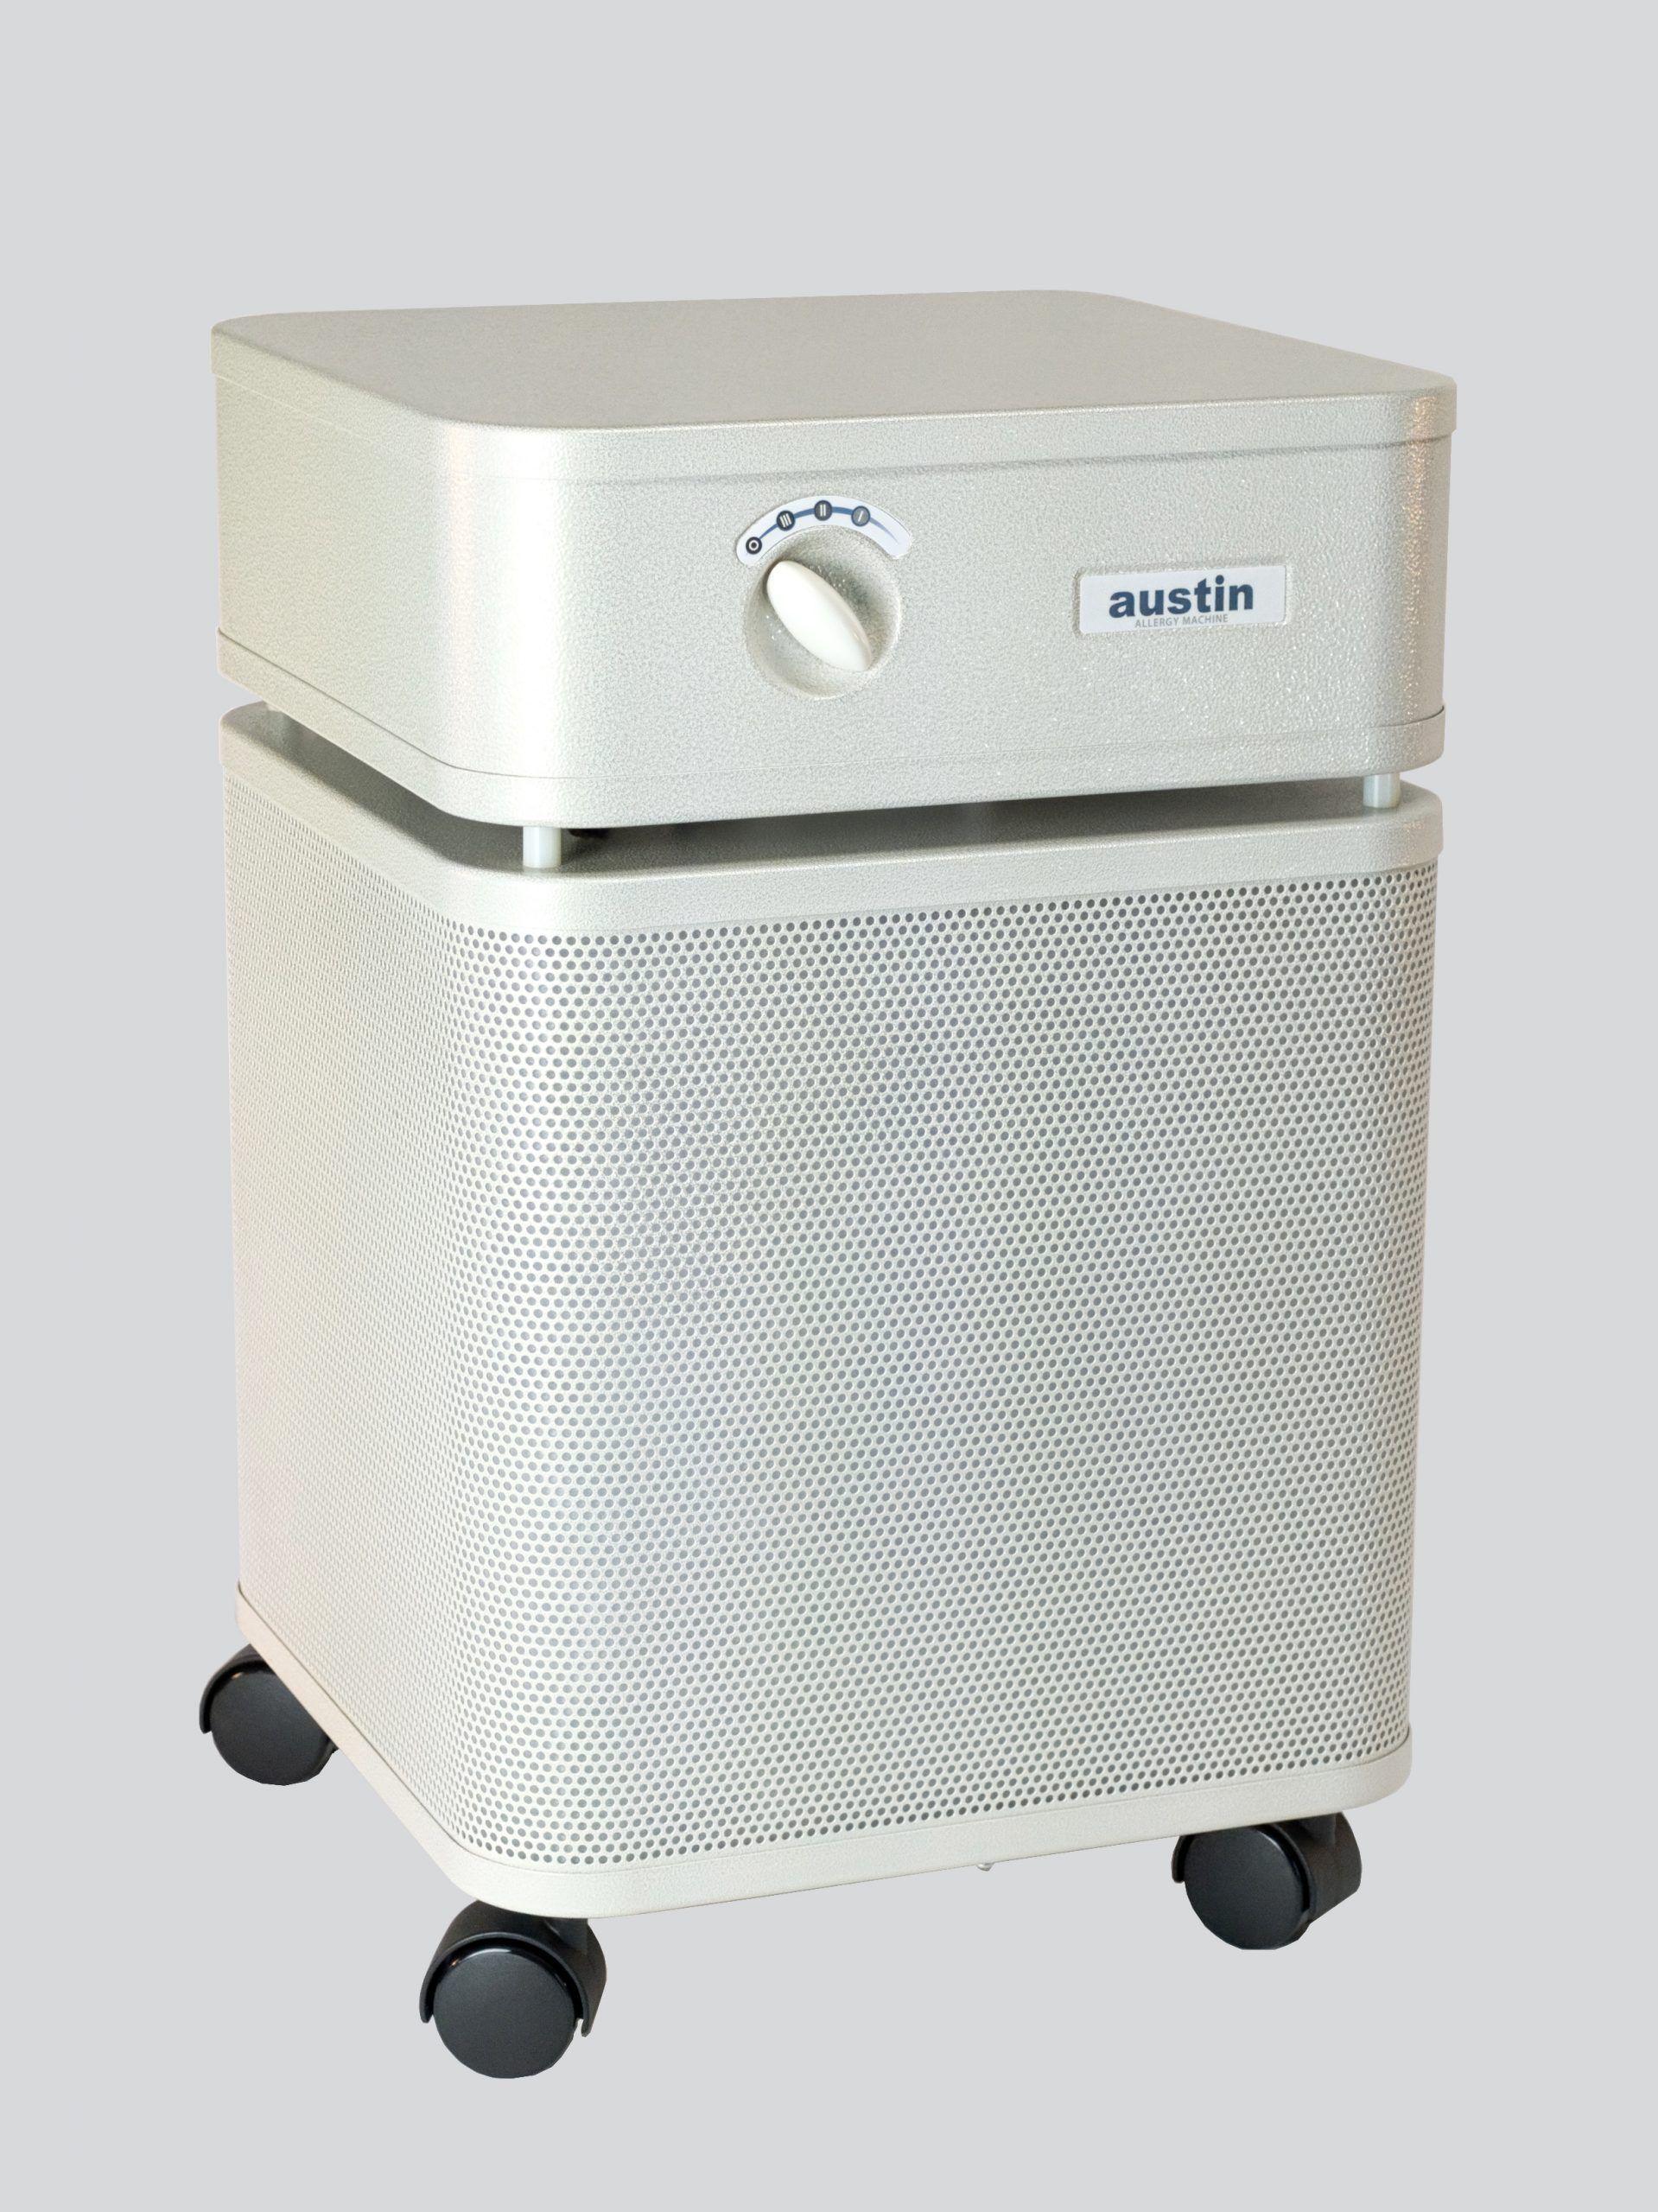 Austin Allergy Machine Air Purifier MADE IN USA - Cetrix Technologies LLC